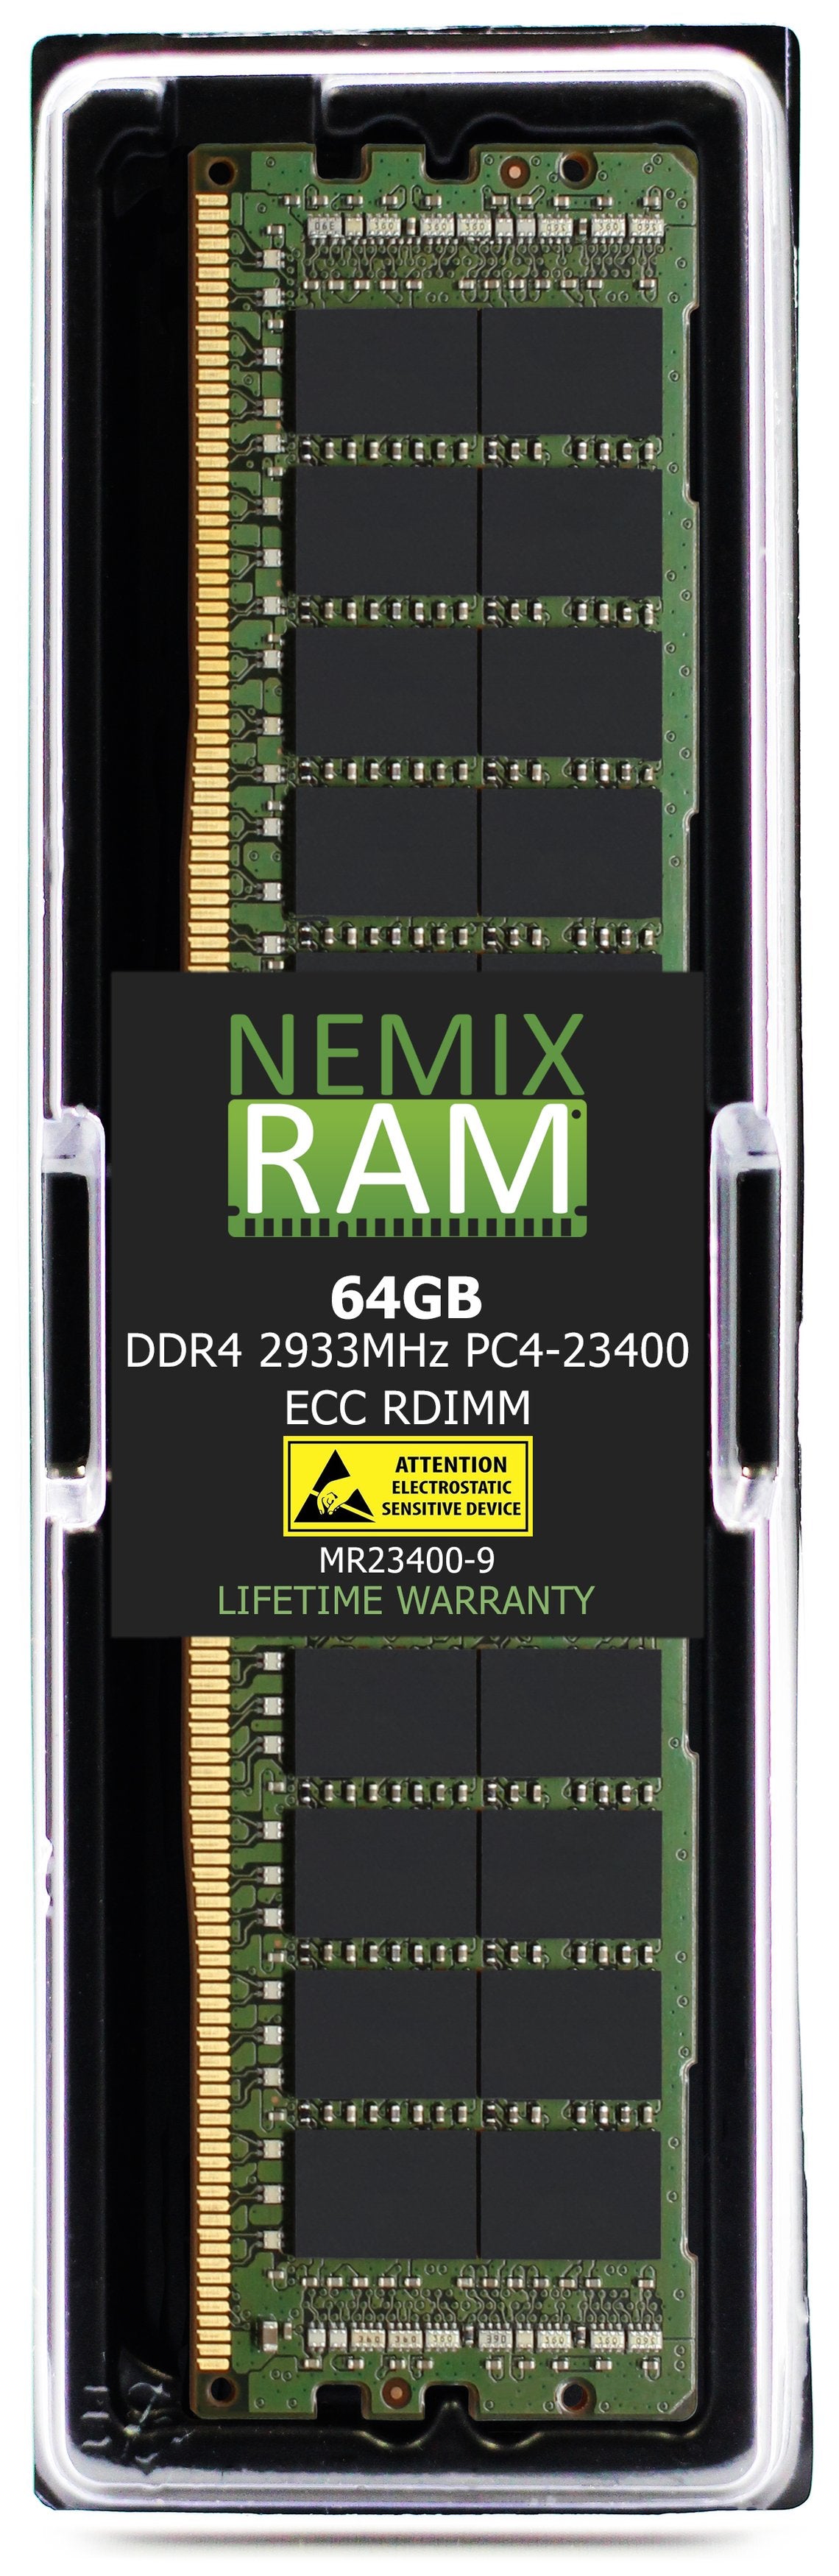 DELL PowerEdge R740 Memory Upgrade